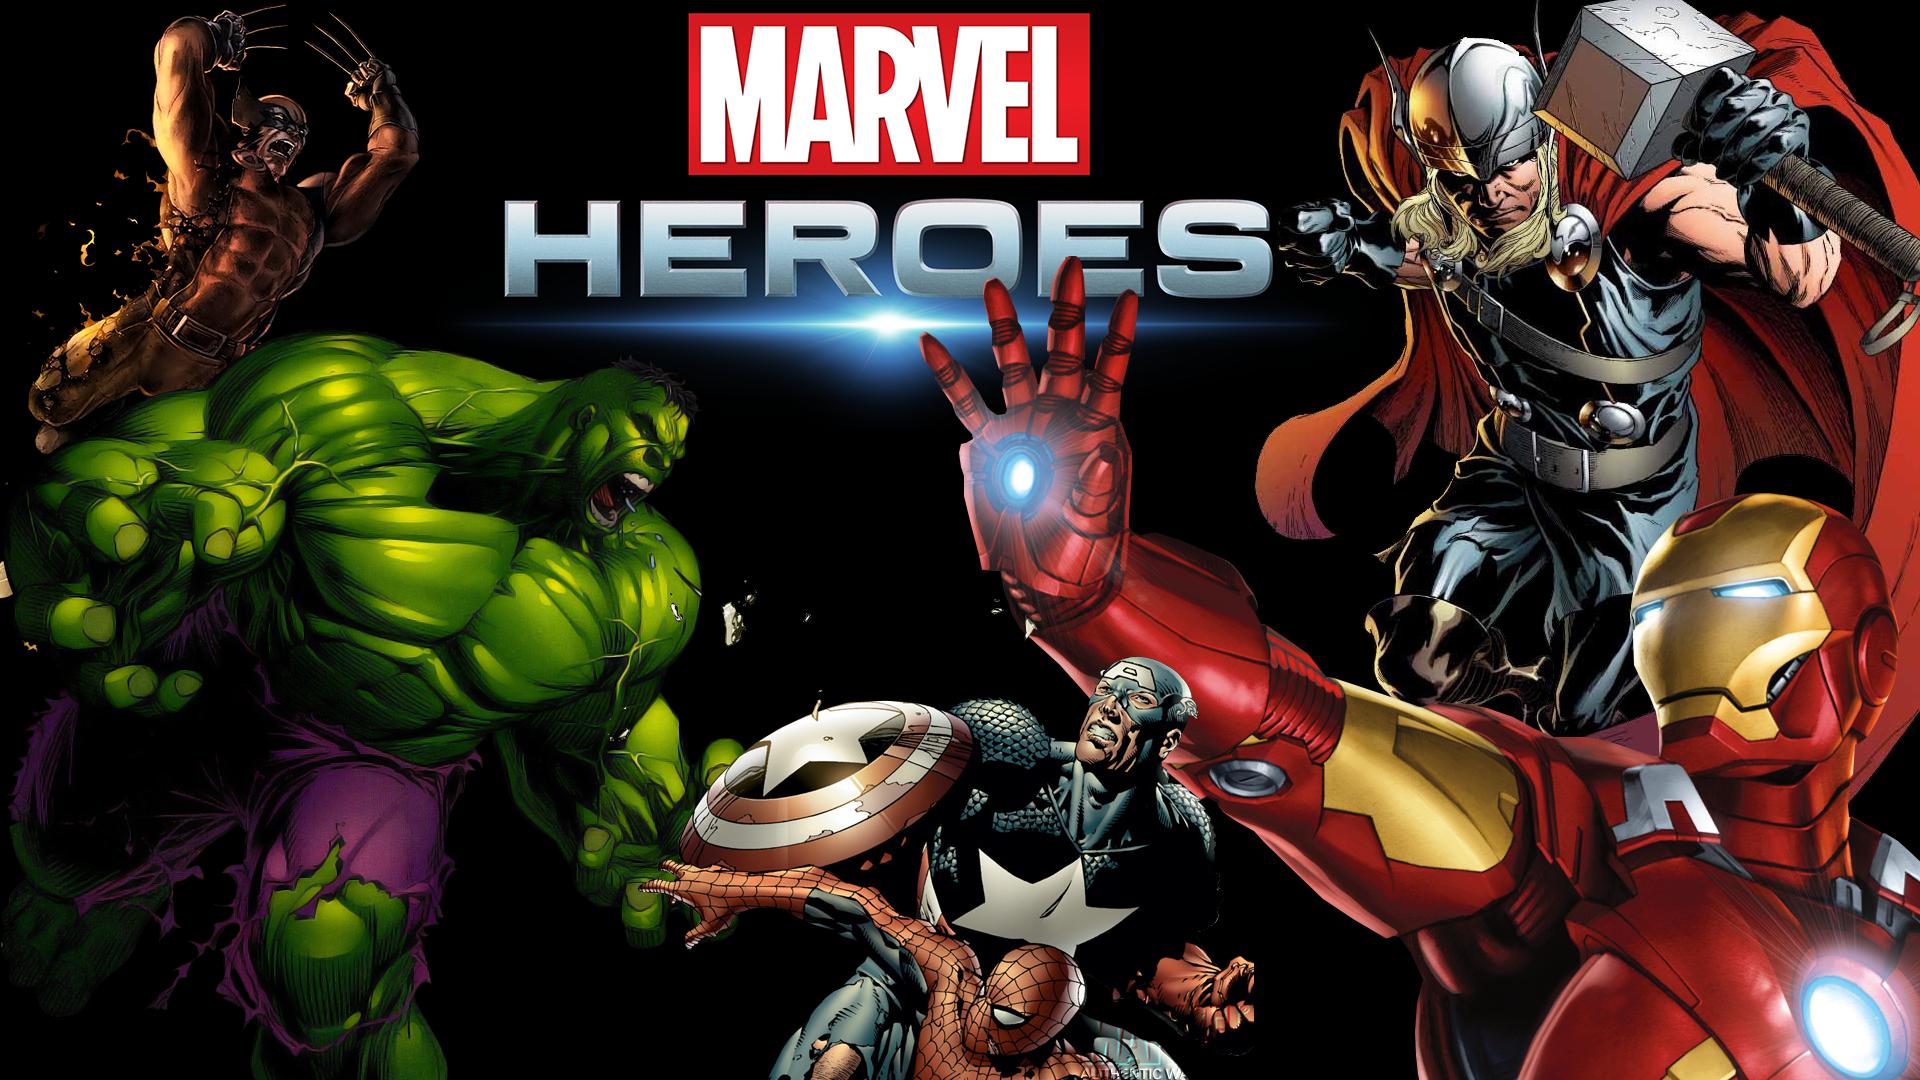 Marvel Heroes Wallpaper iimgurcom